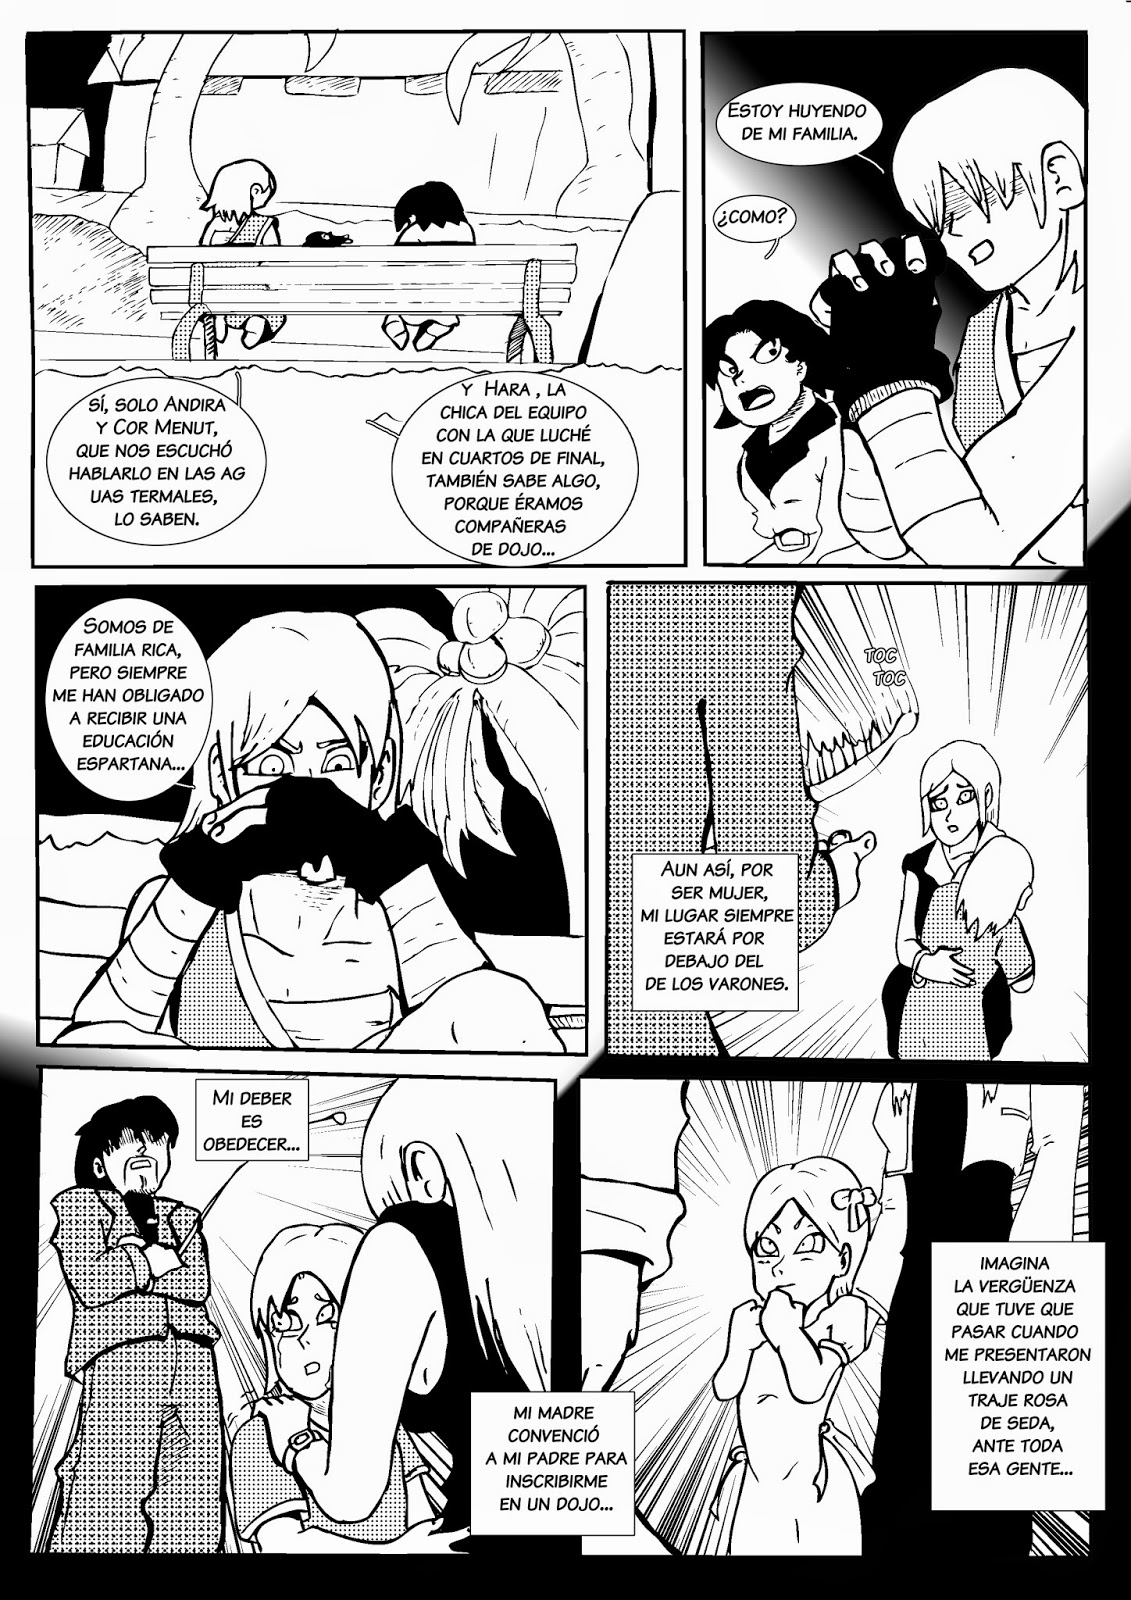 fanmanga: dboth  saga III revelations Chapter 34 sheika gaiden - Página 4 DBOTH+chapter+20+pagina+05